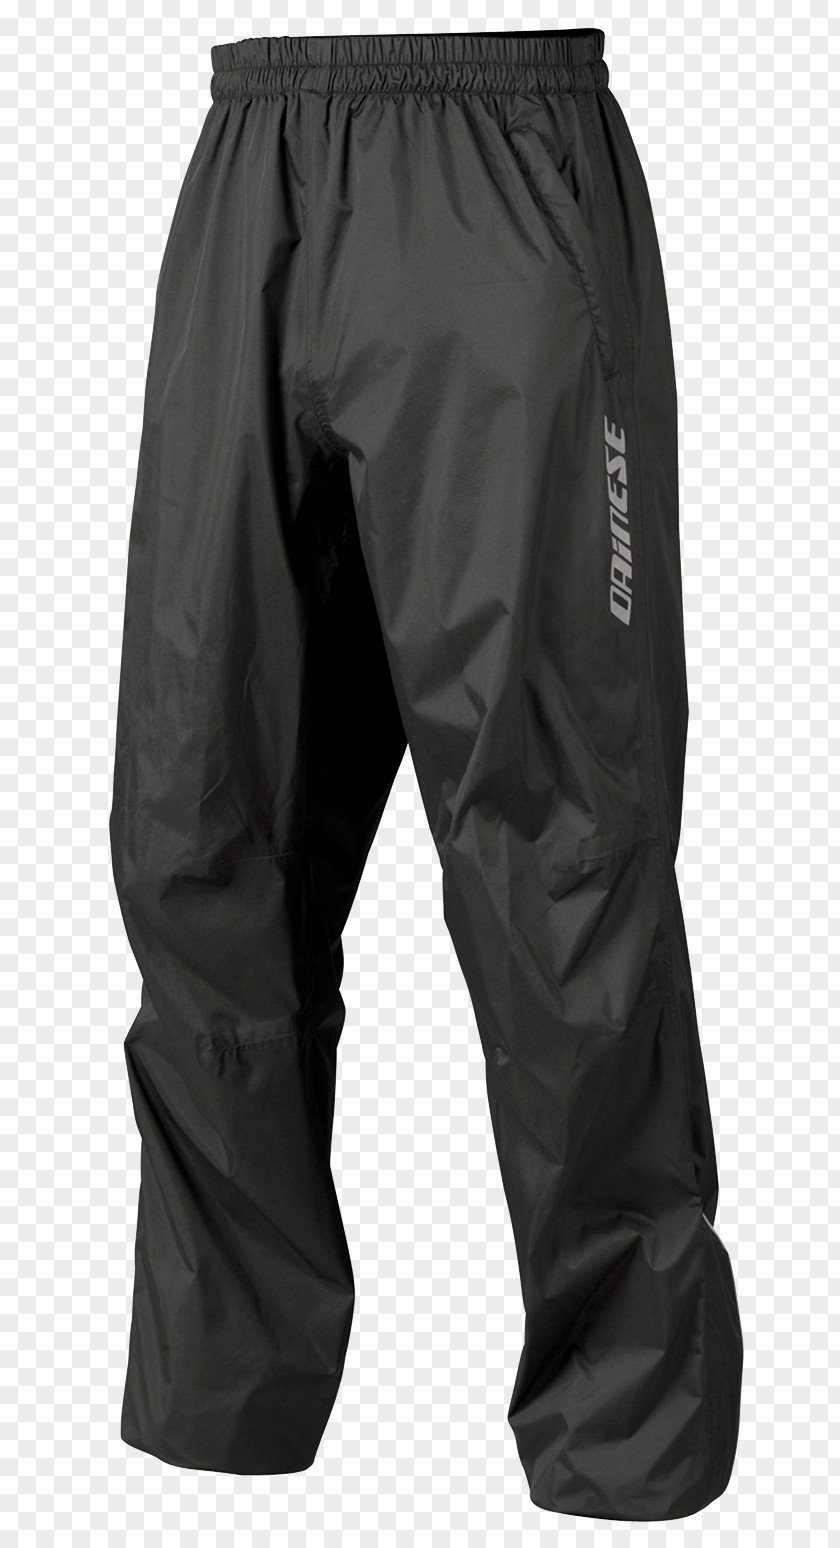 Skiing Amazon.com Cargo Pants Ski Suit Clothing PNG